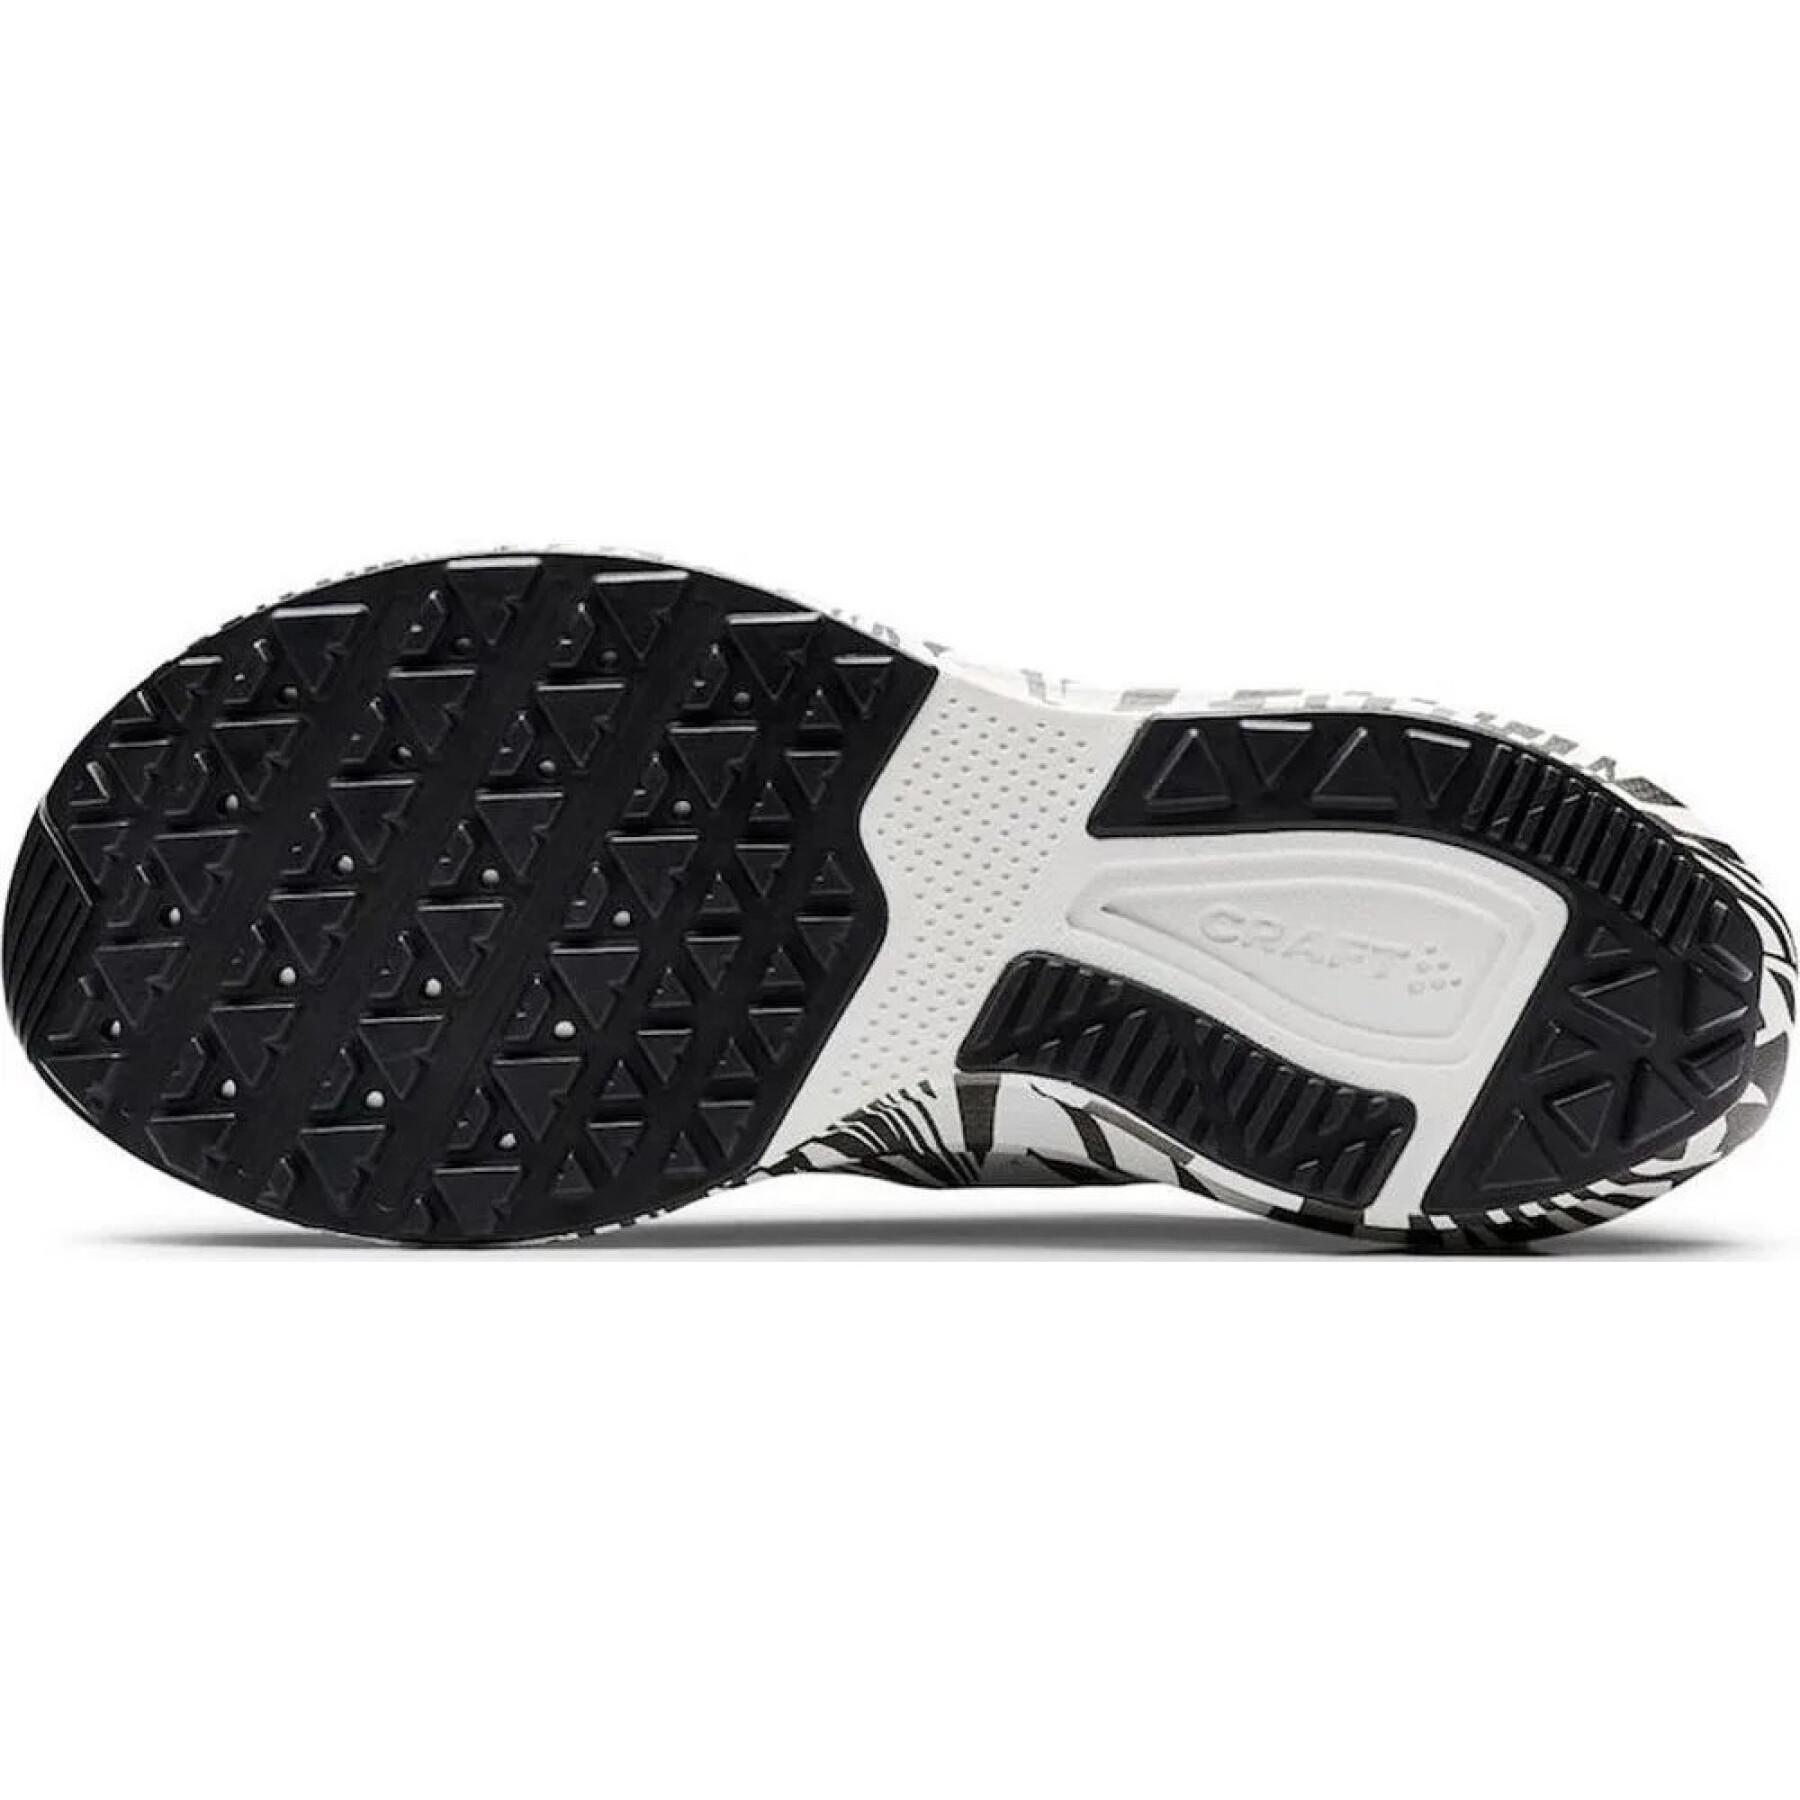 Schuhe Craft ctm ultra carbon